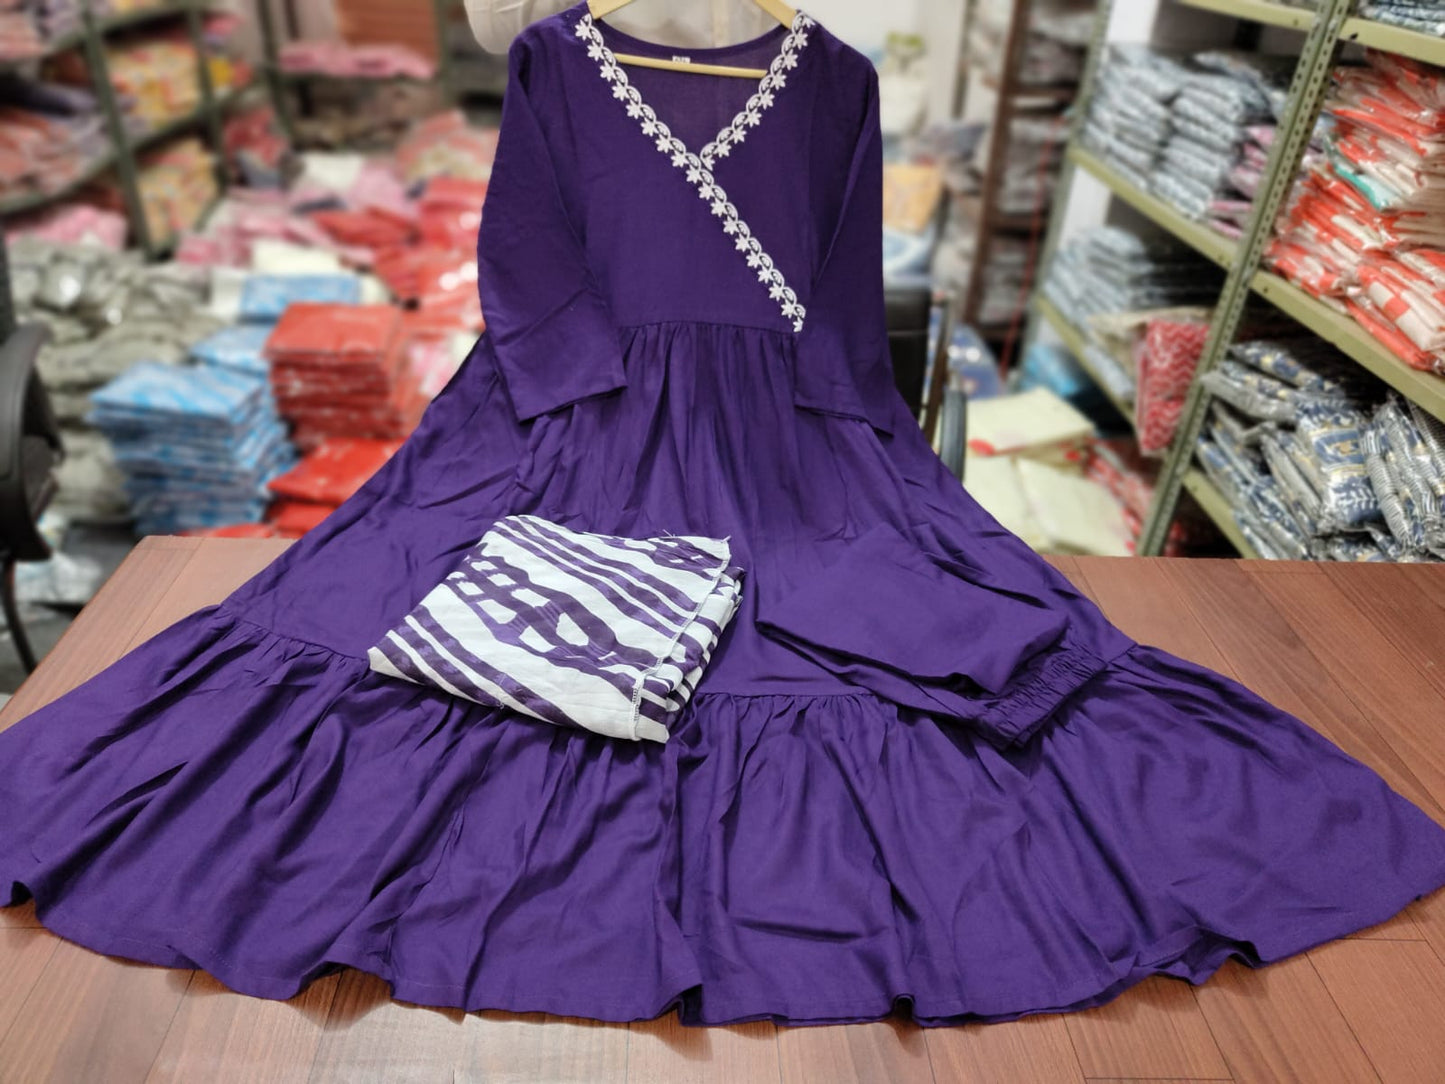 Heavy reyon purple gown